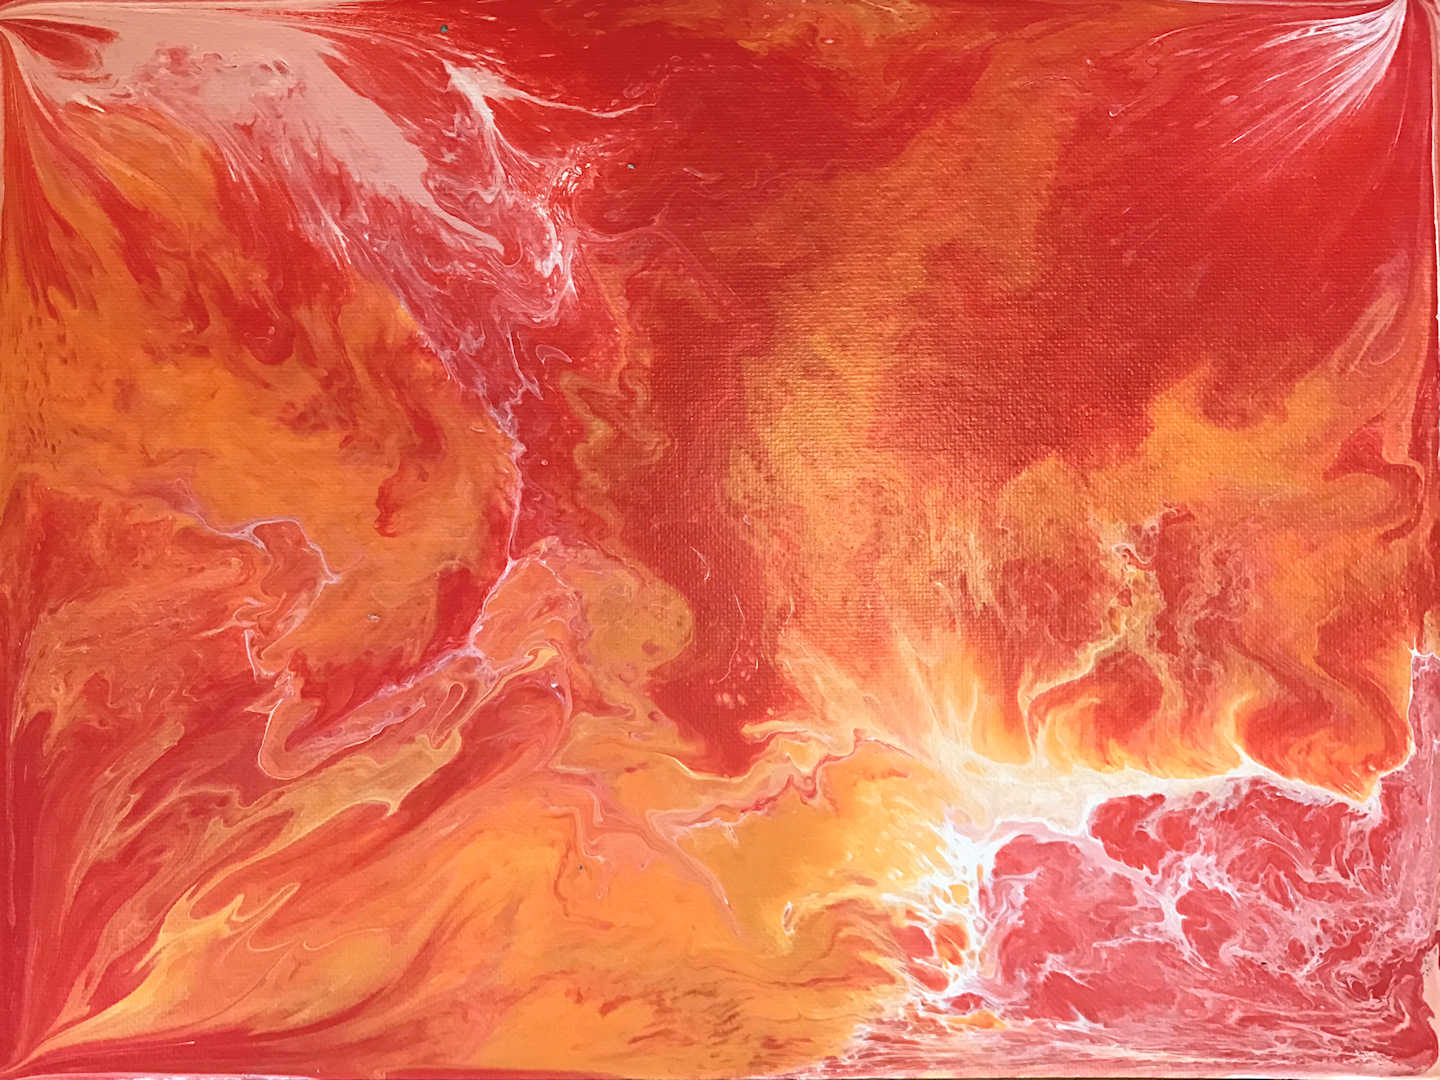 acrylic liquid pour artwork - 11 x 14 - dark pink, orange, white